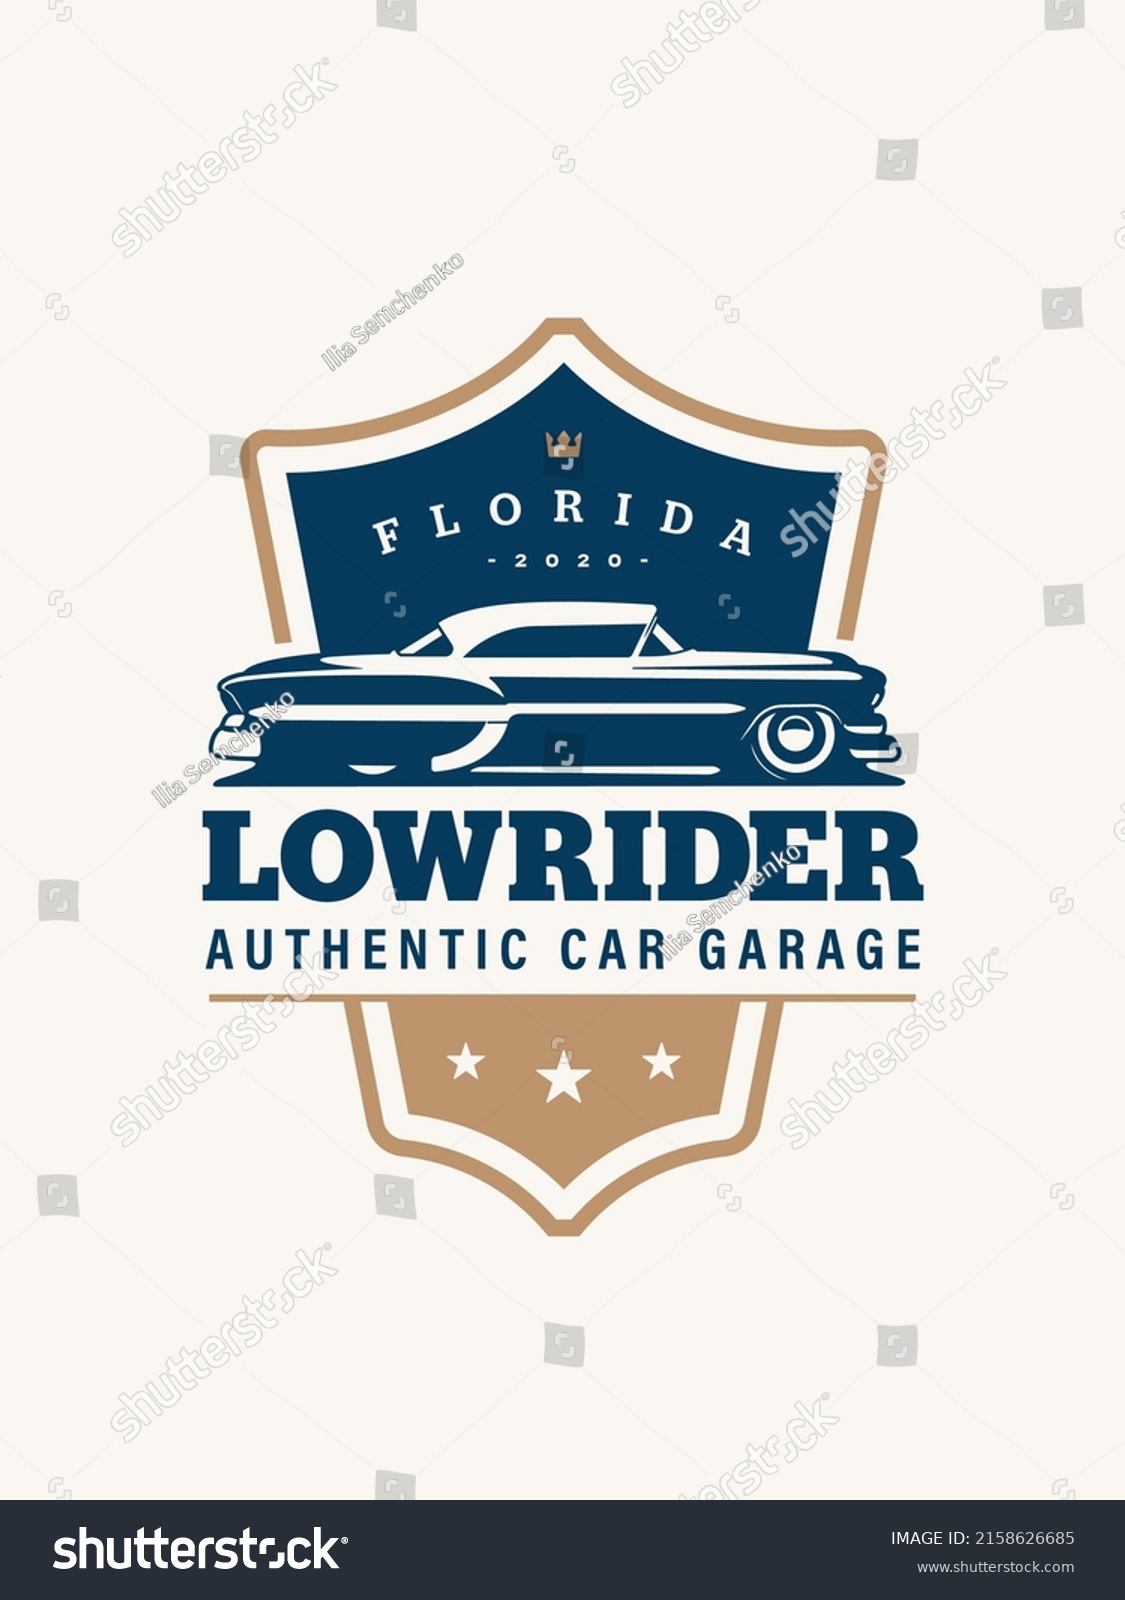 SVG of Lowrider logo template. Vintage style vector illustration element for retro design label. Suitable for garage, shops, tires, car wash, car restoration, repair and racing. Authentic car garage logo svg